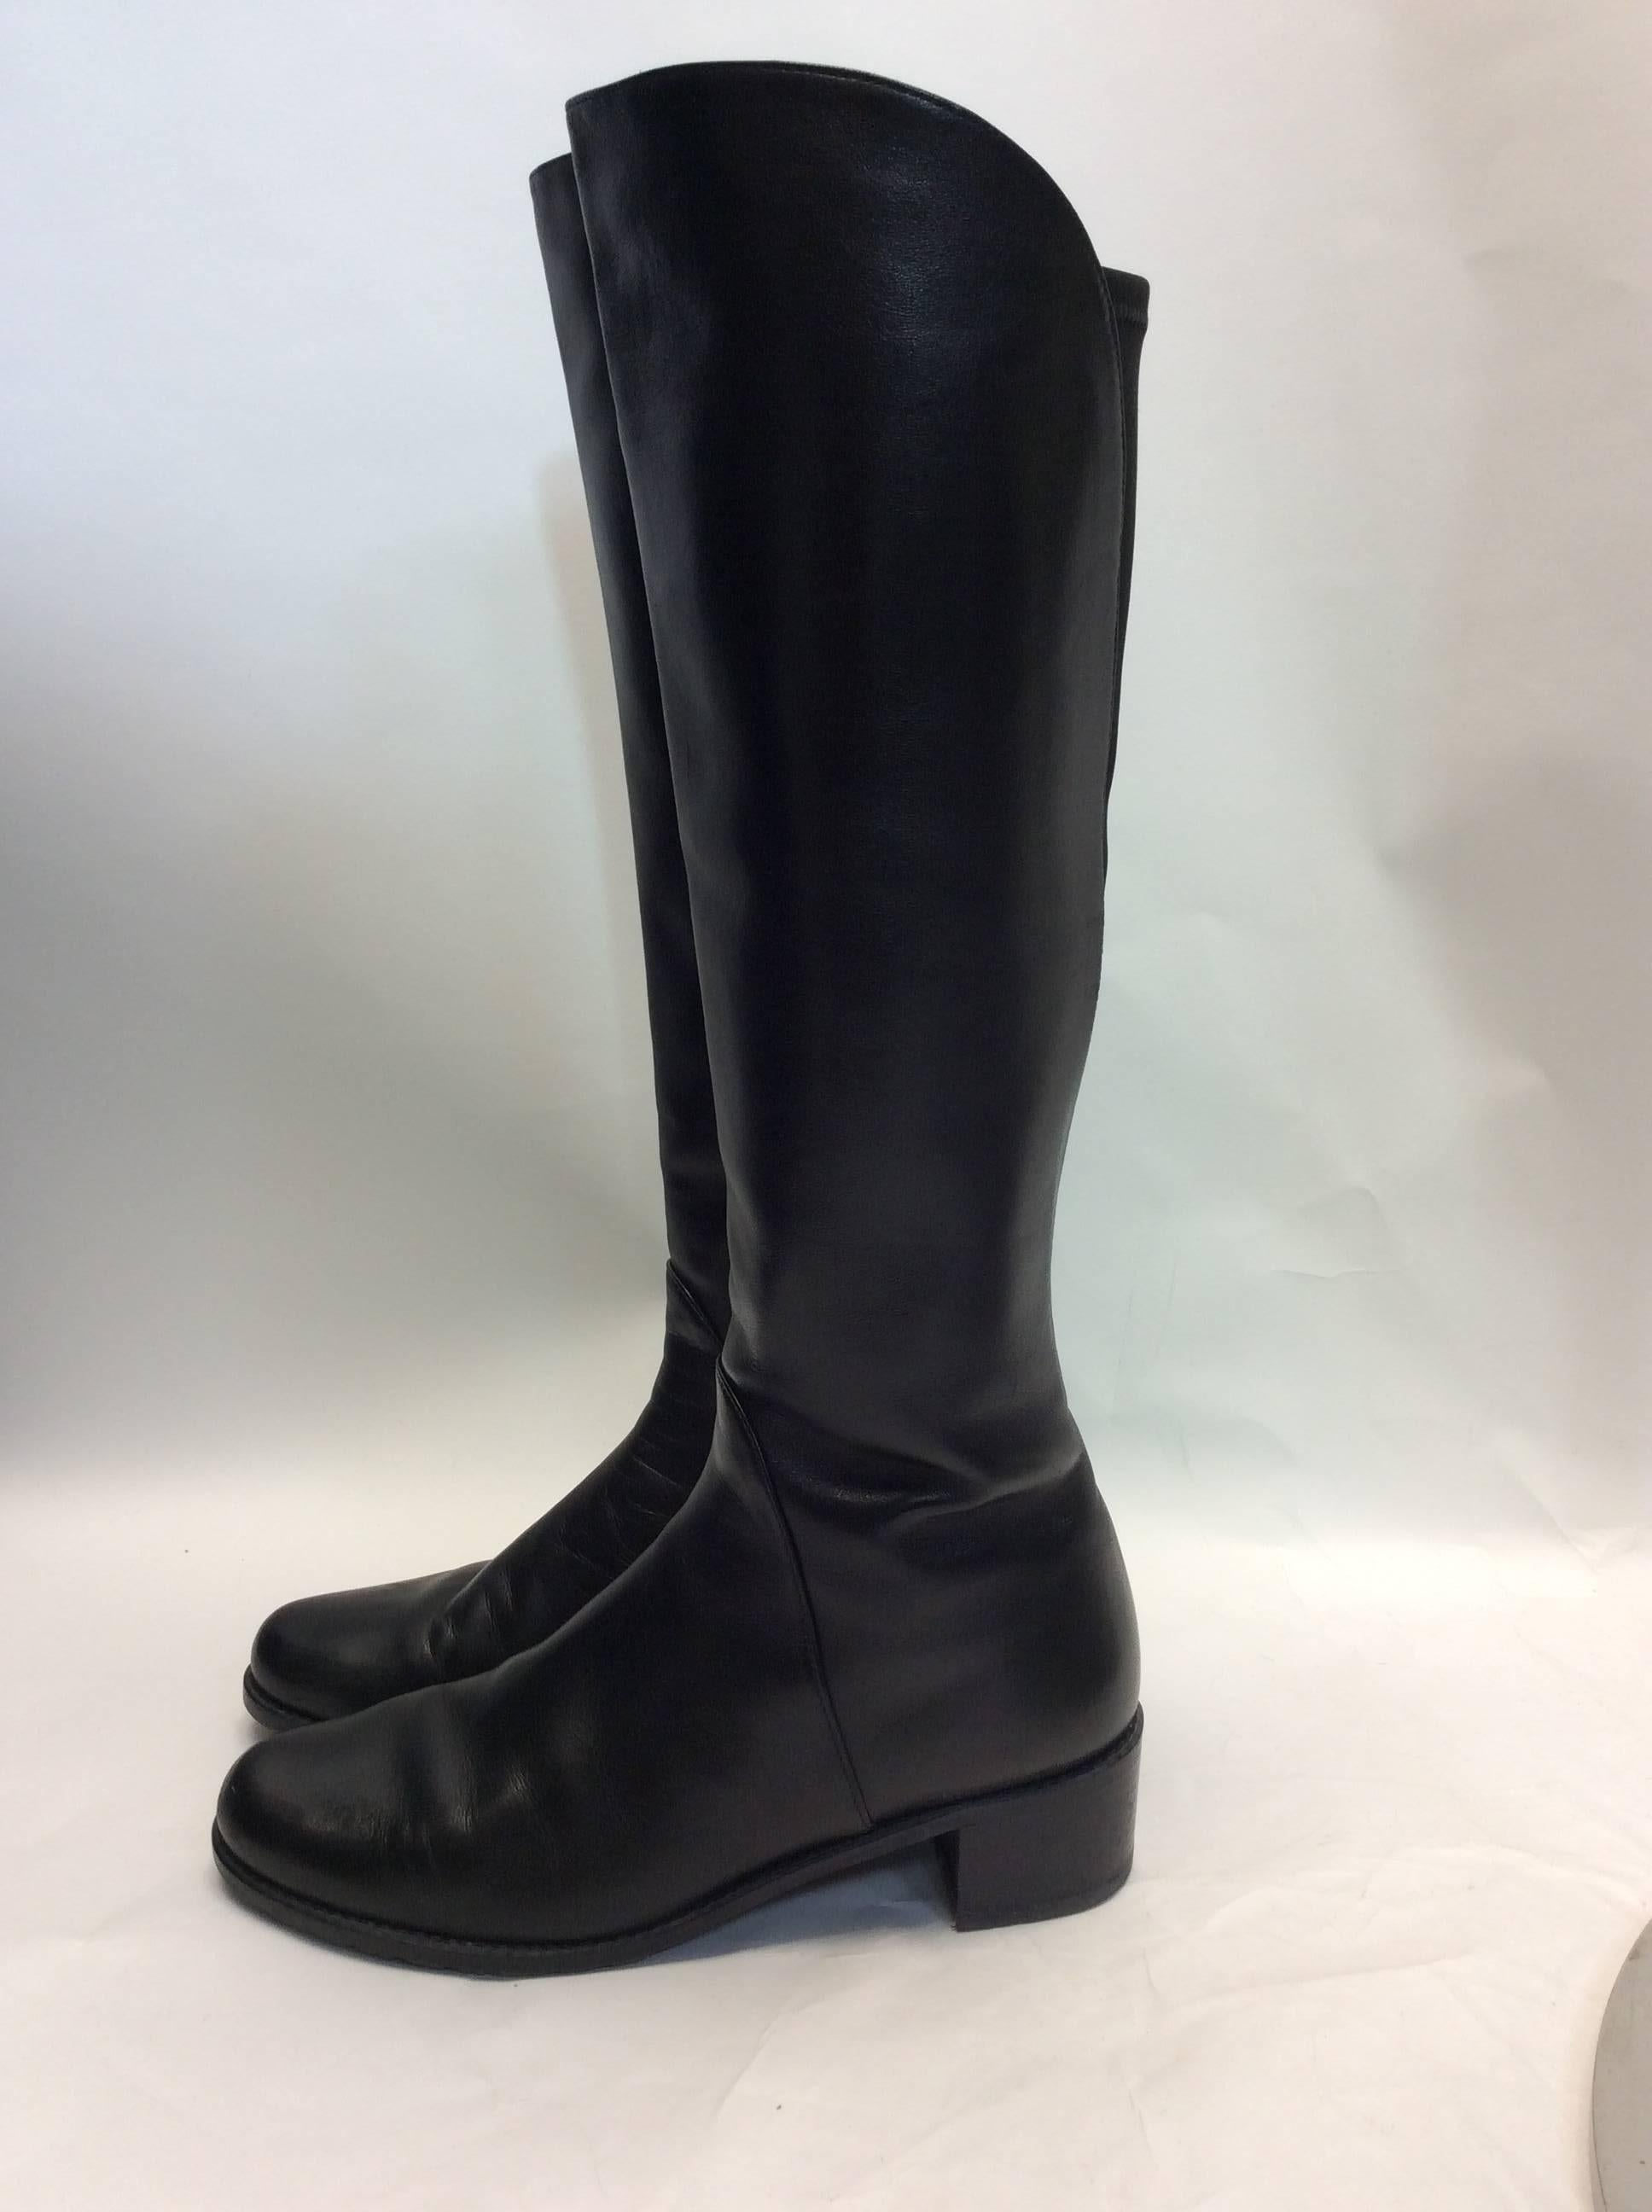 Black Stuart Weitzman Leather Boots
Size 7.5
$199
Hi-lo sides
